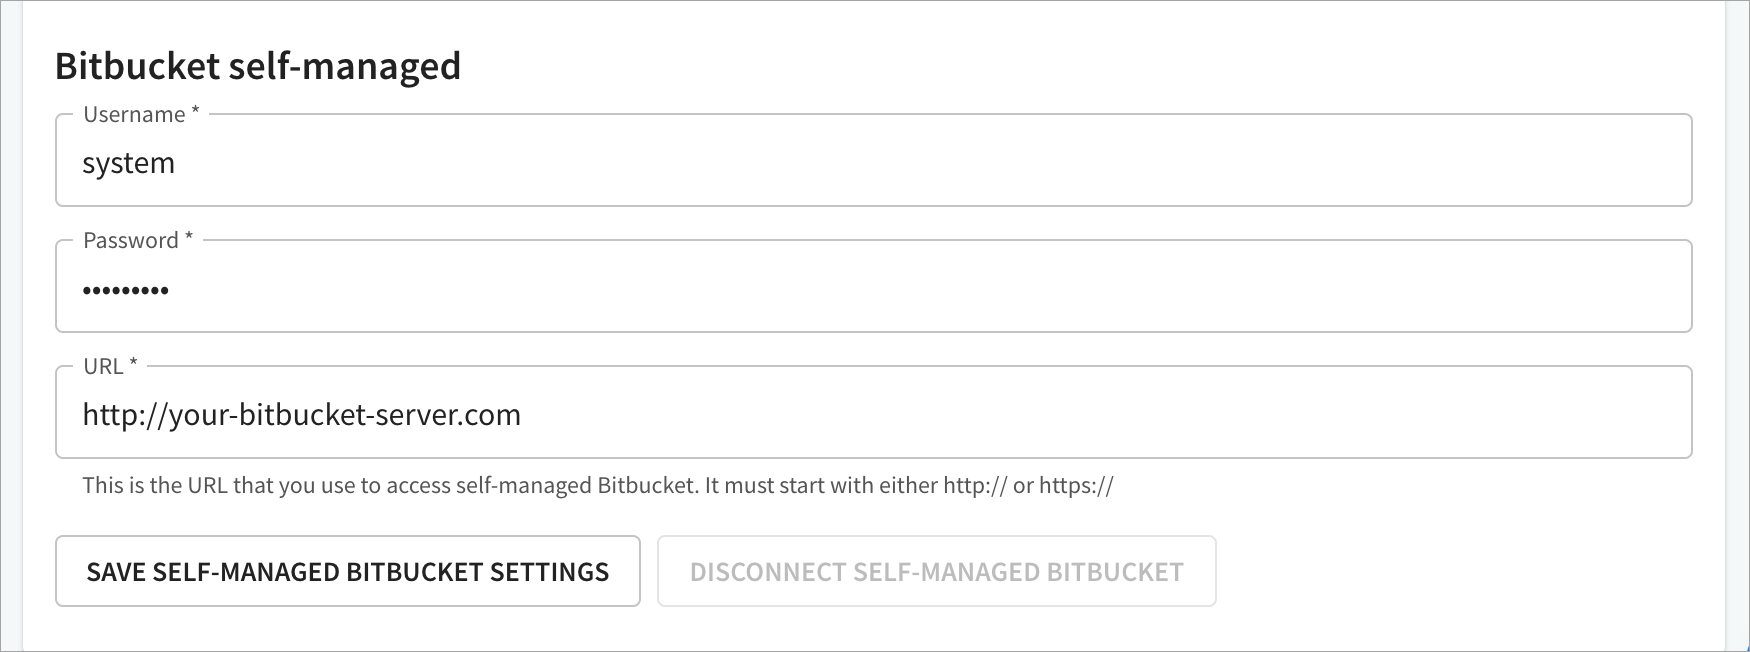 Organization source control bitbucket self-managed settings